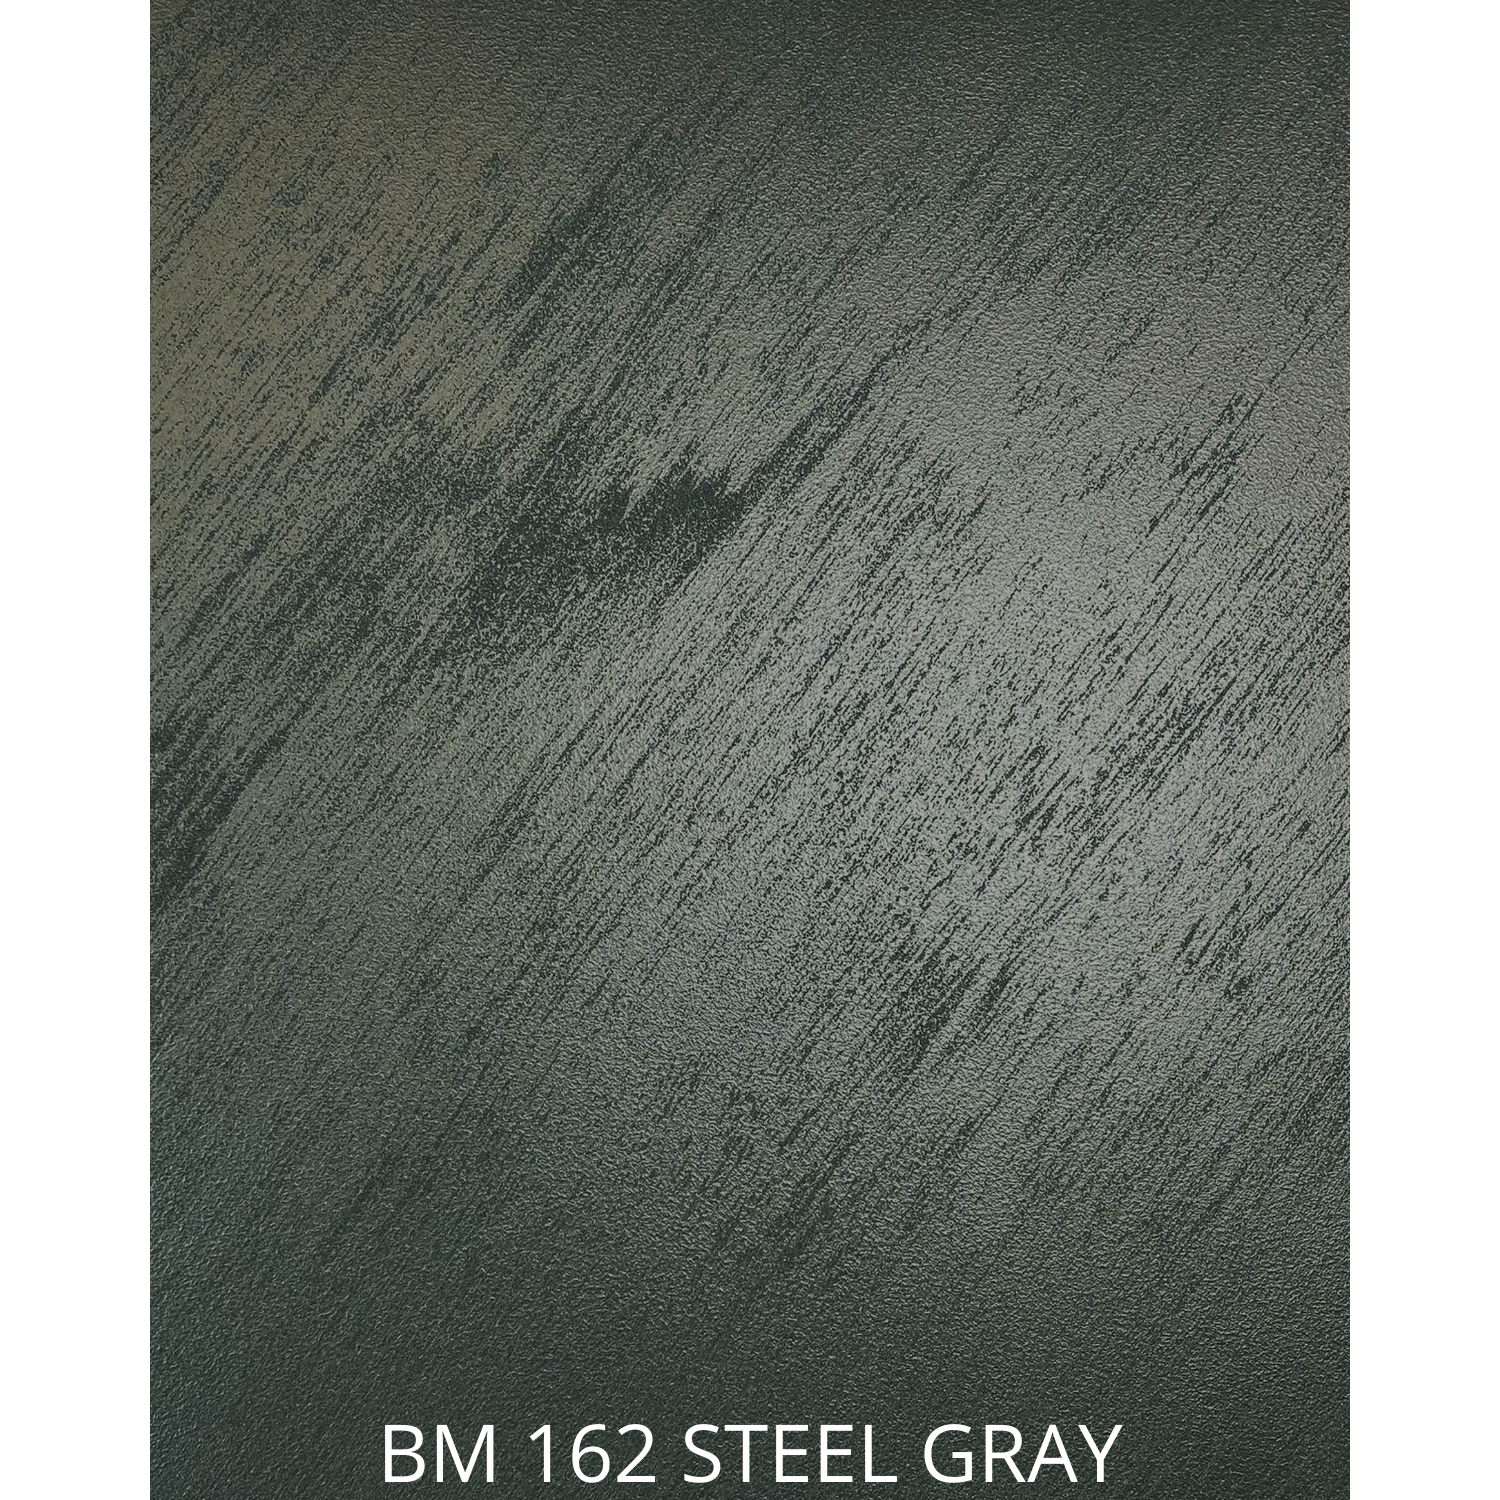 BM 152 SMOKE GRAY